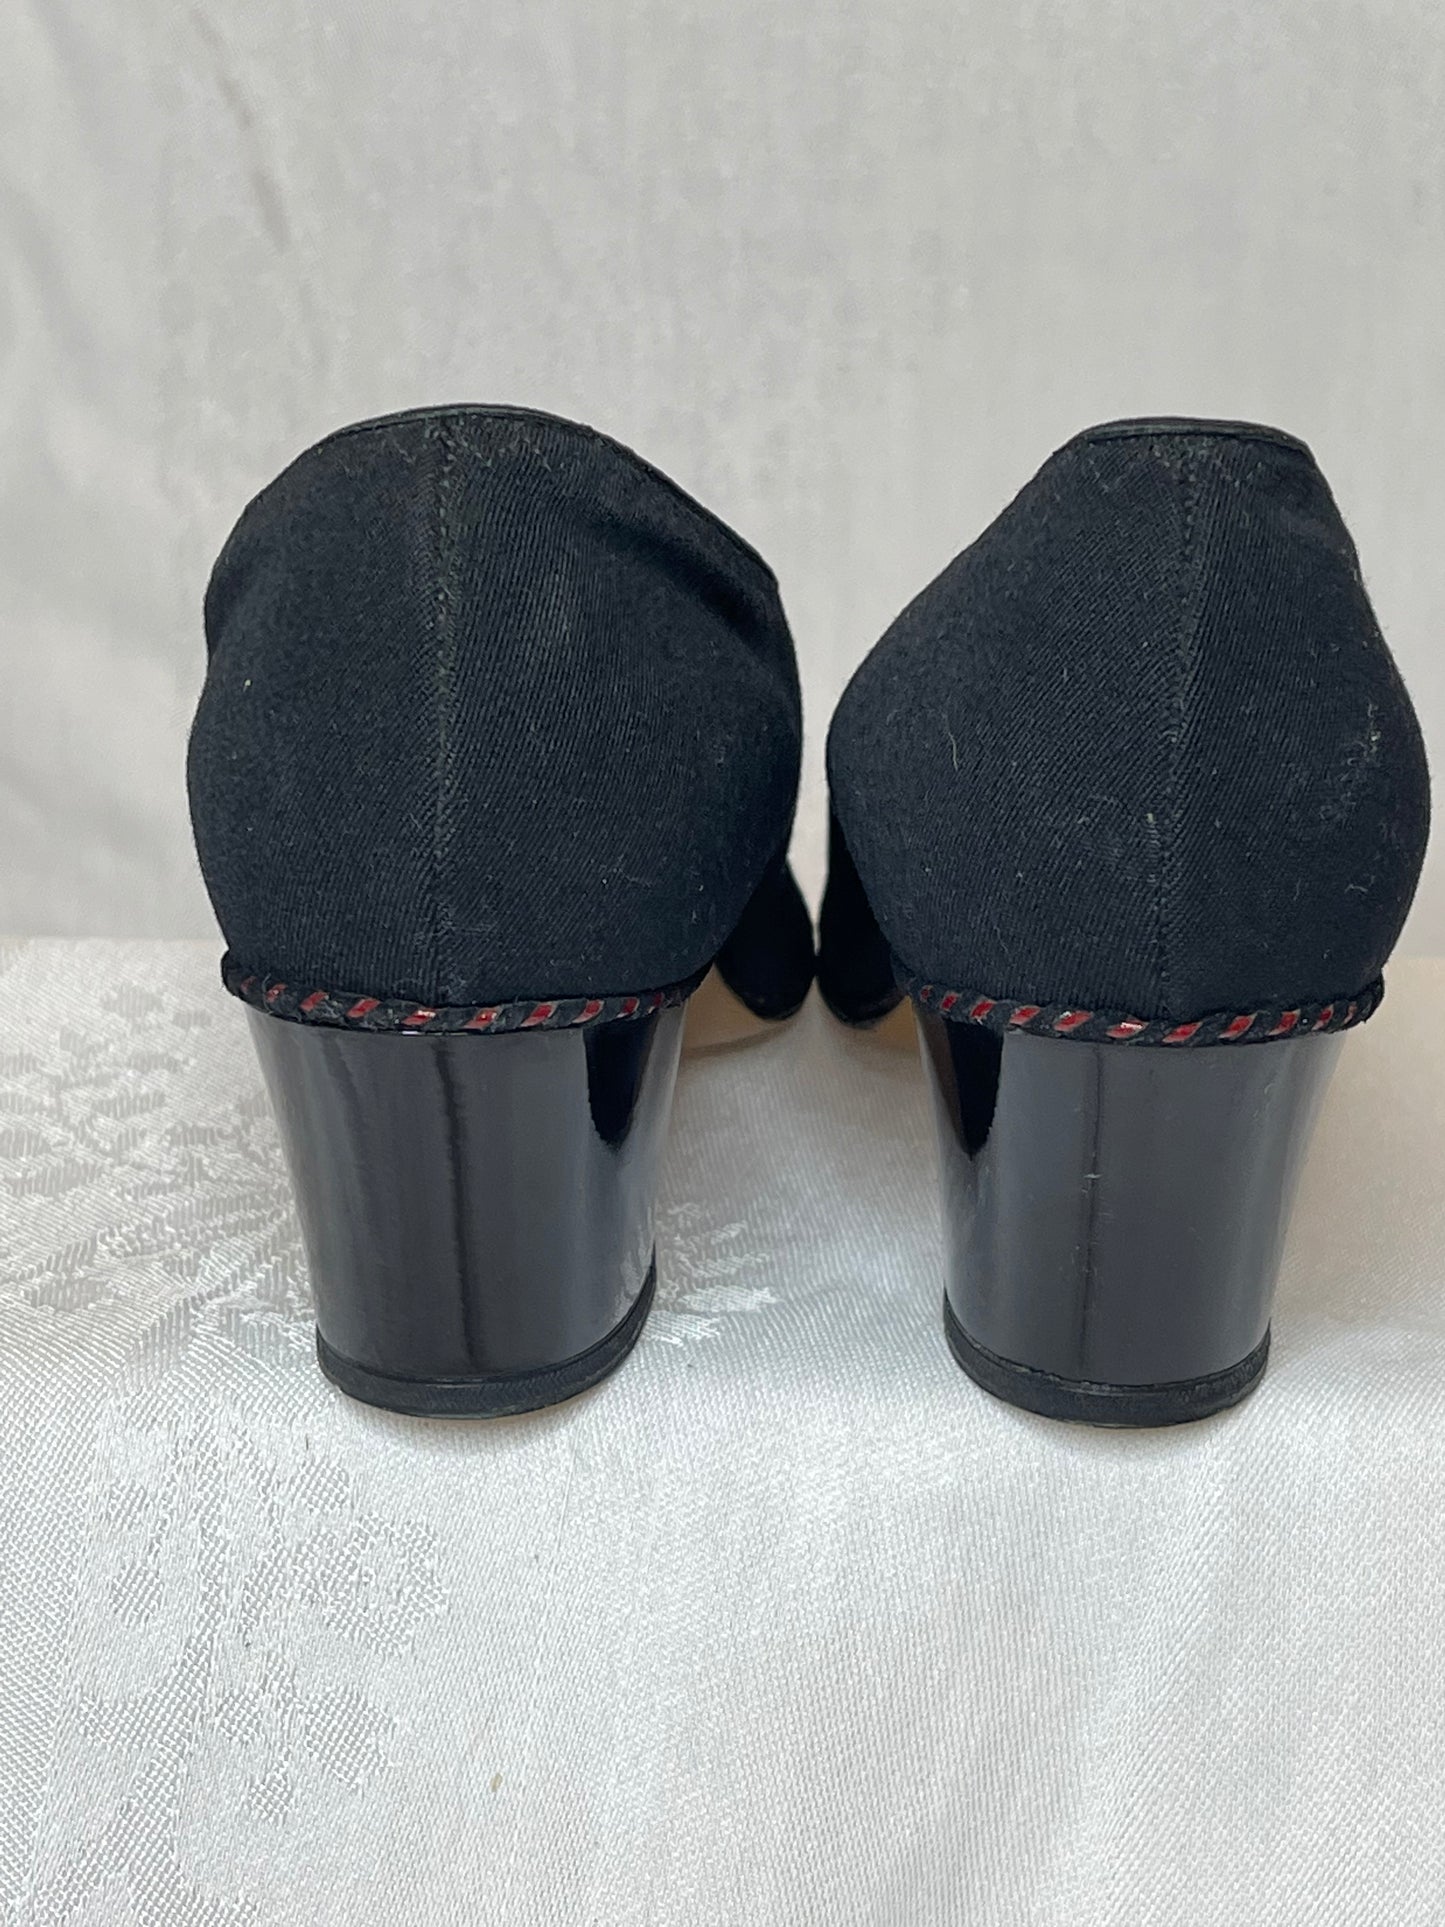 40s chunky heel black & red pumps